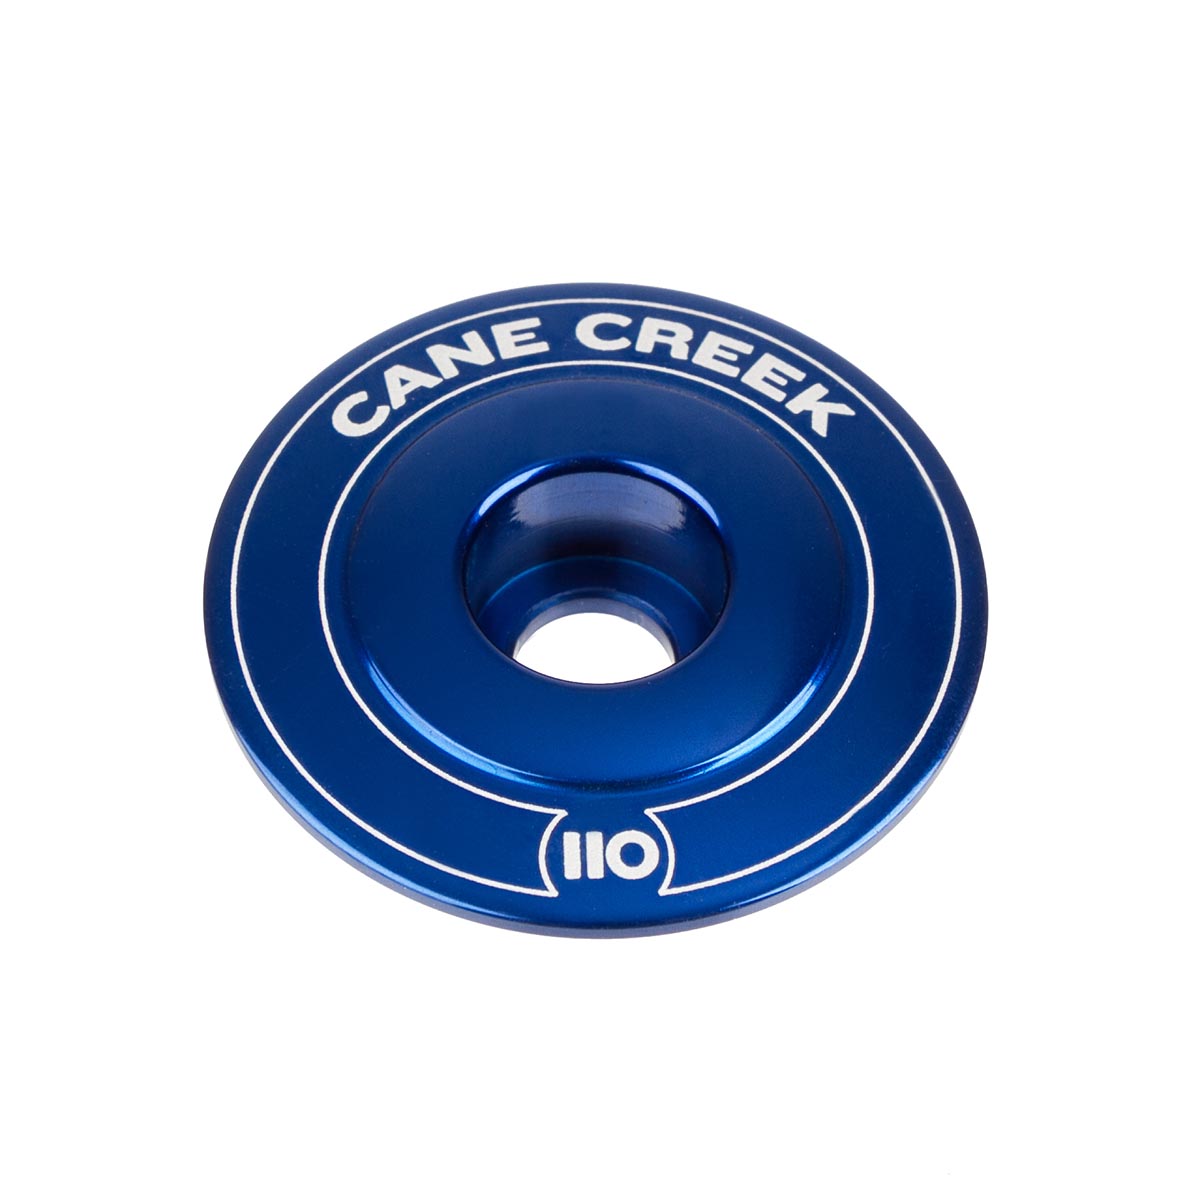 Cane Creek Ahead Cap 110 Blue, Aluminium, 1 1/8 Inches